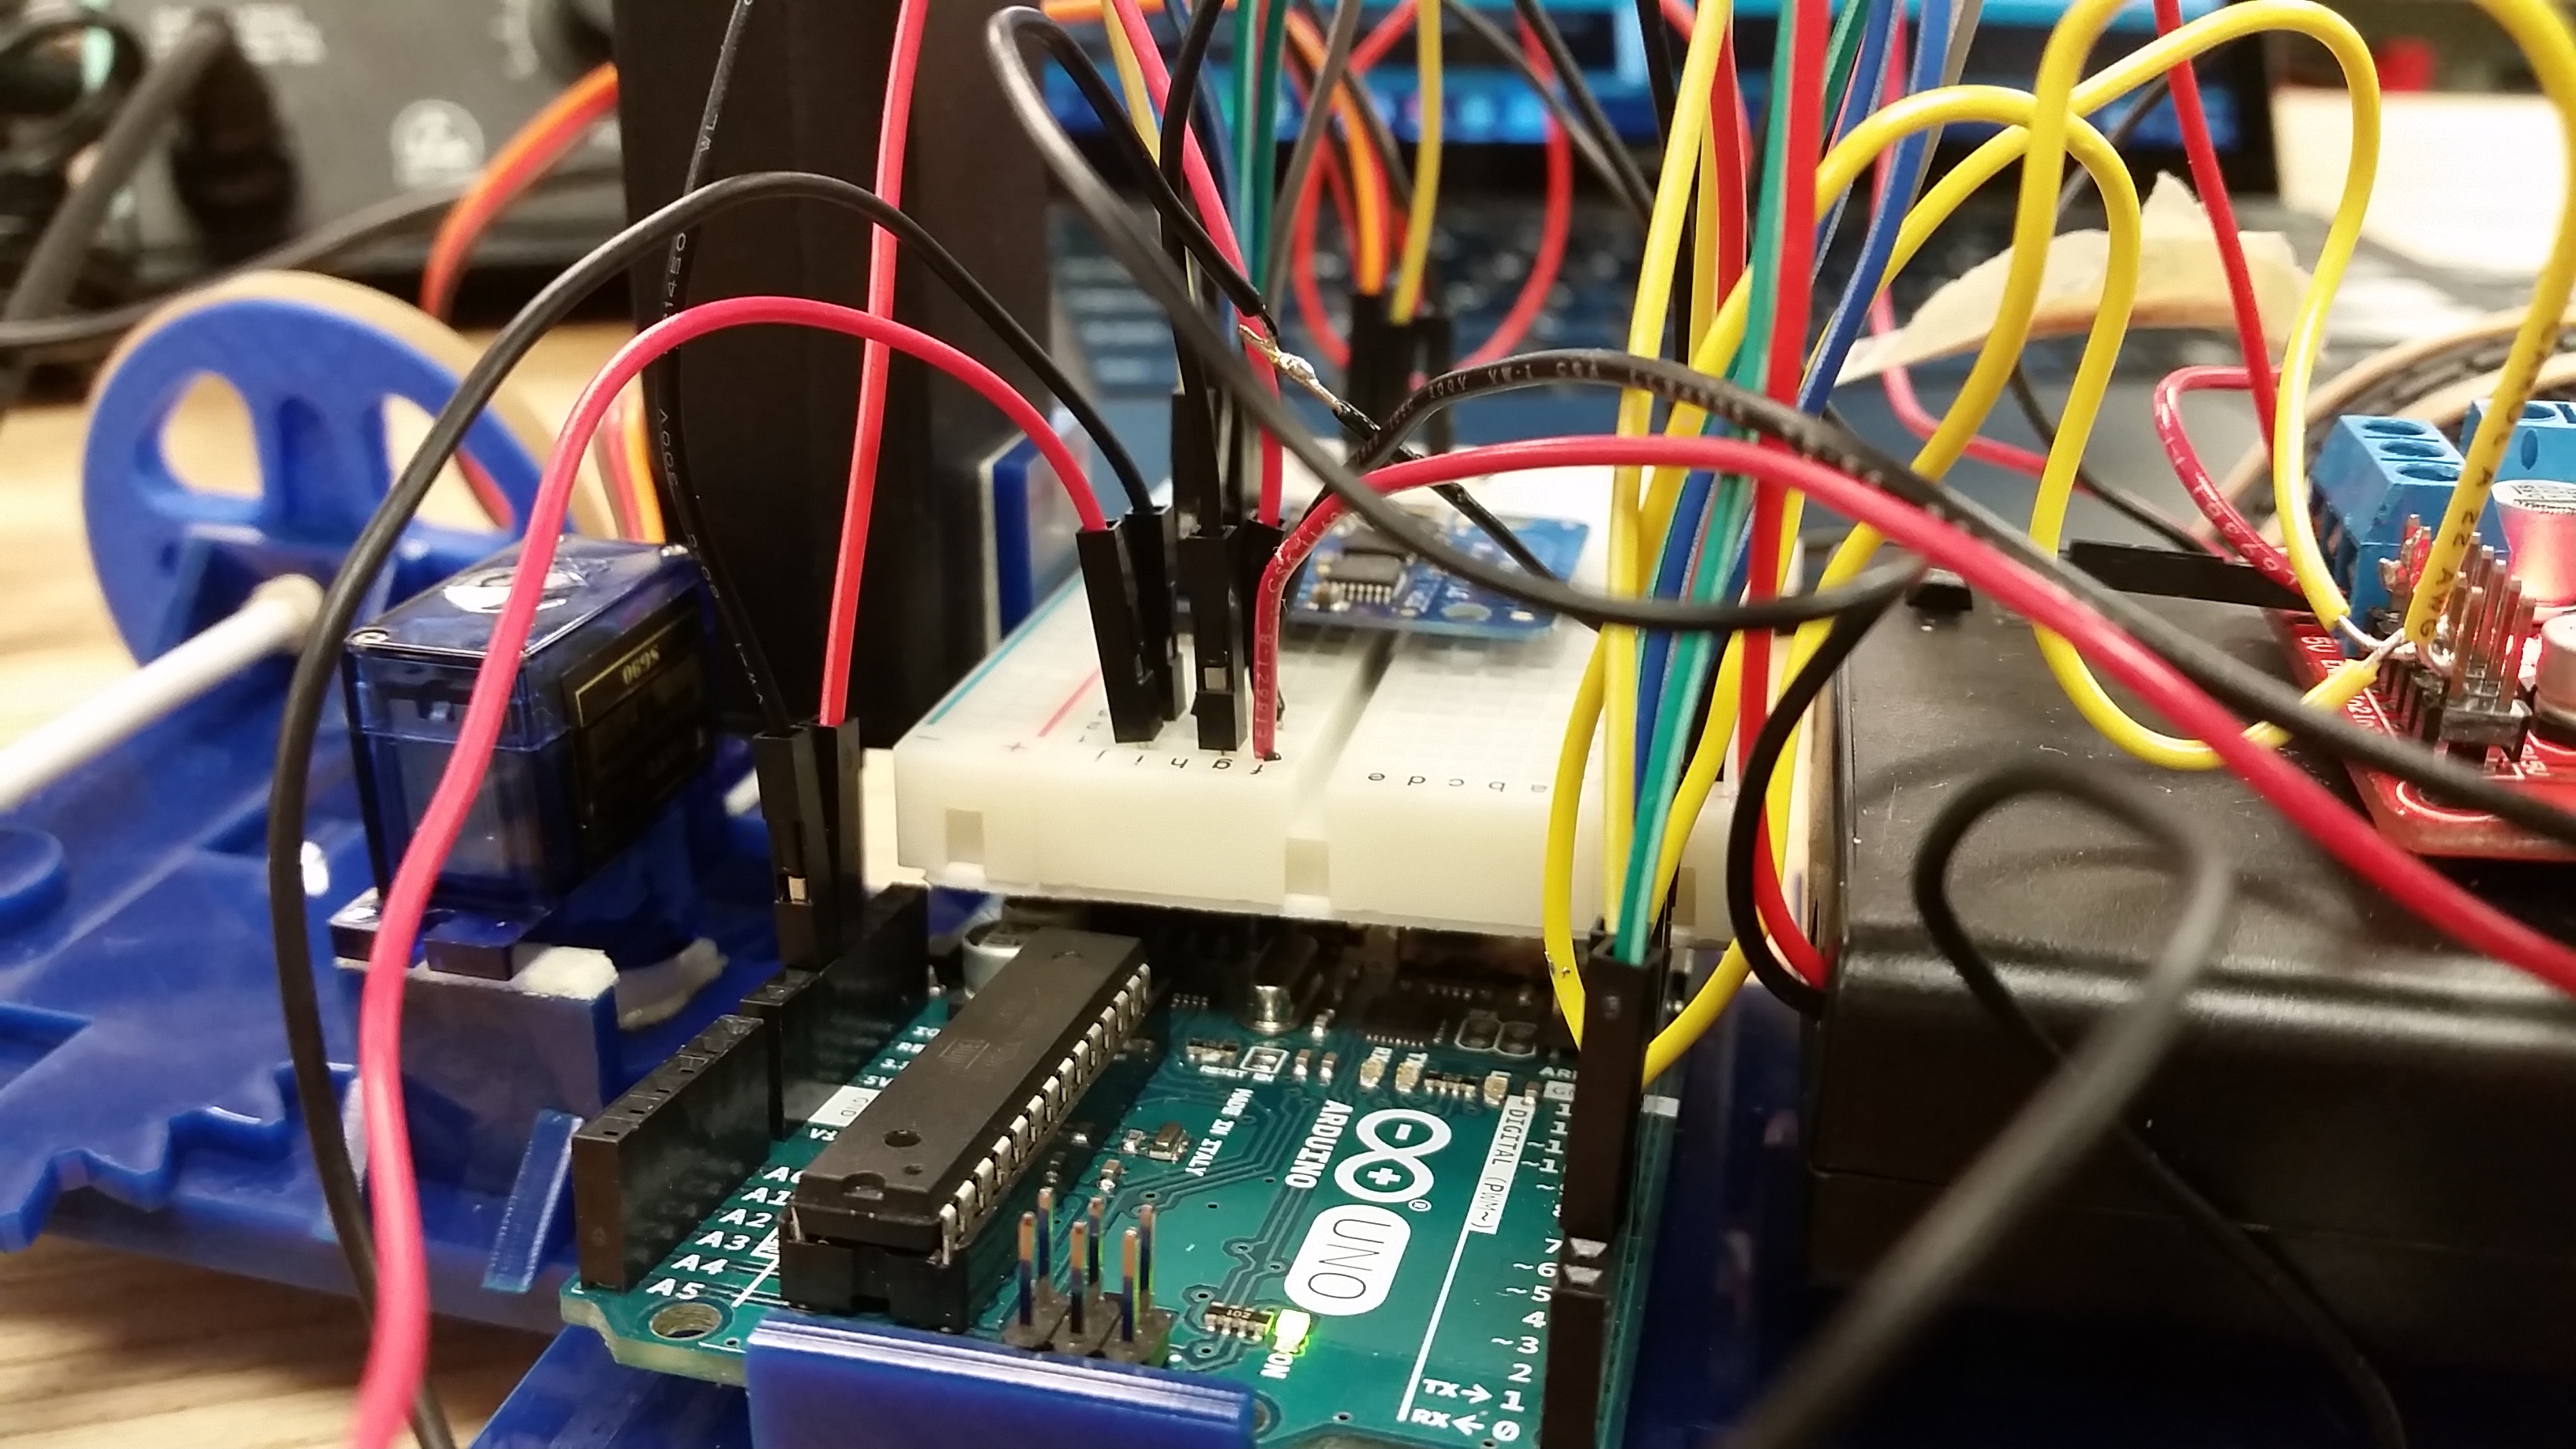 program servo motor arduino to rotate left by 30 degree